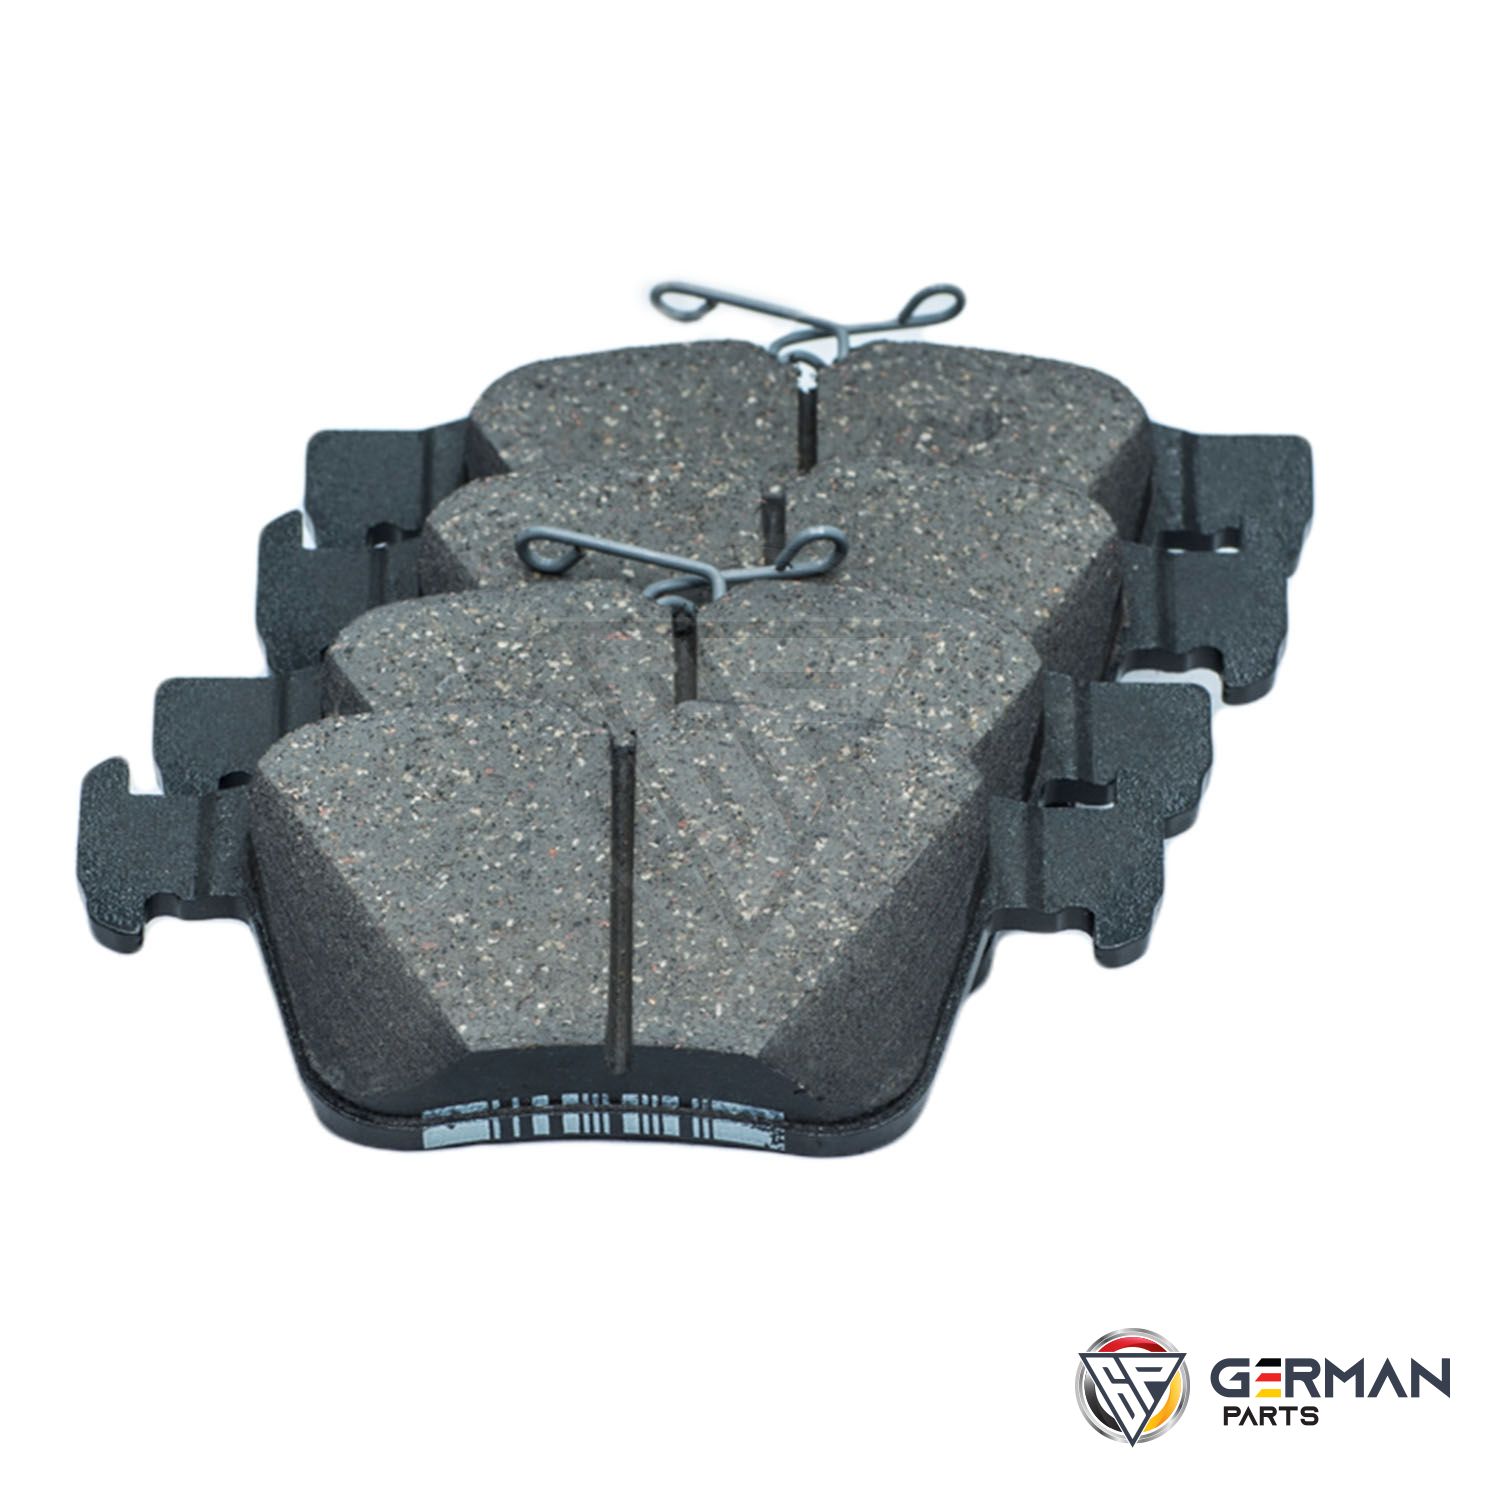 Buy Audi Volkswagen Rear Brake Pad Set 5Q0698451P - German Parts